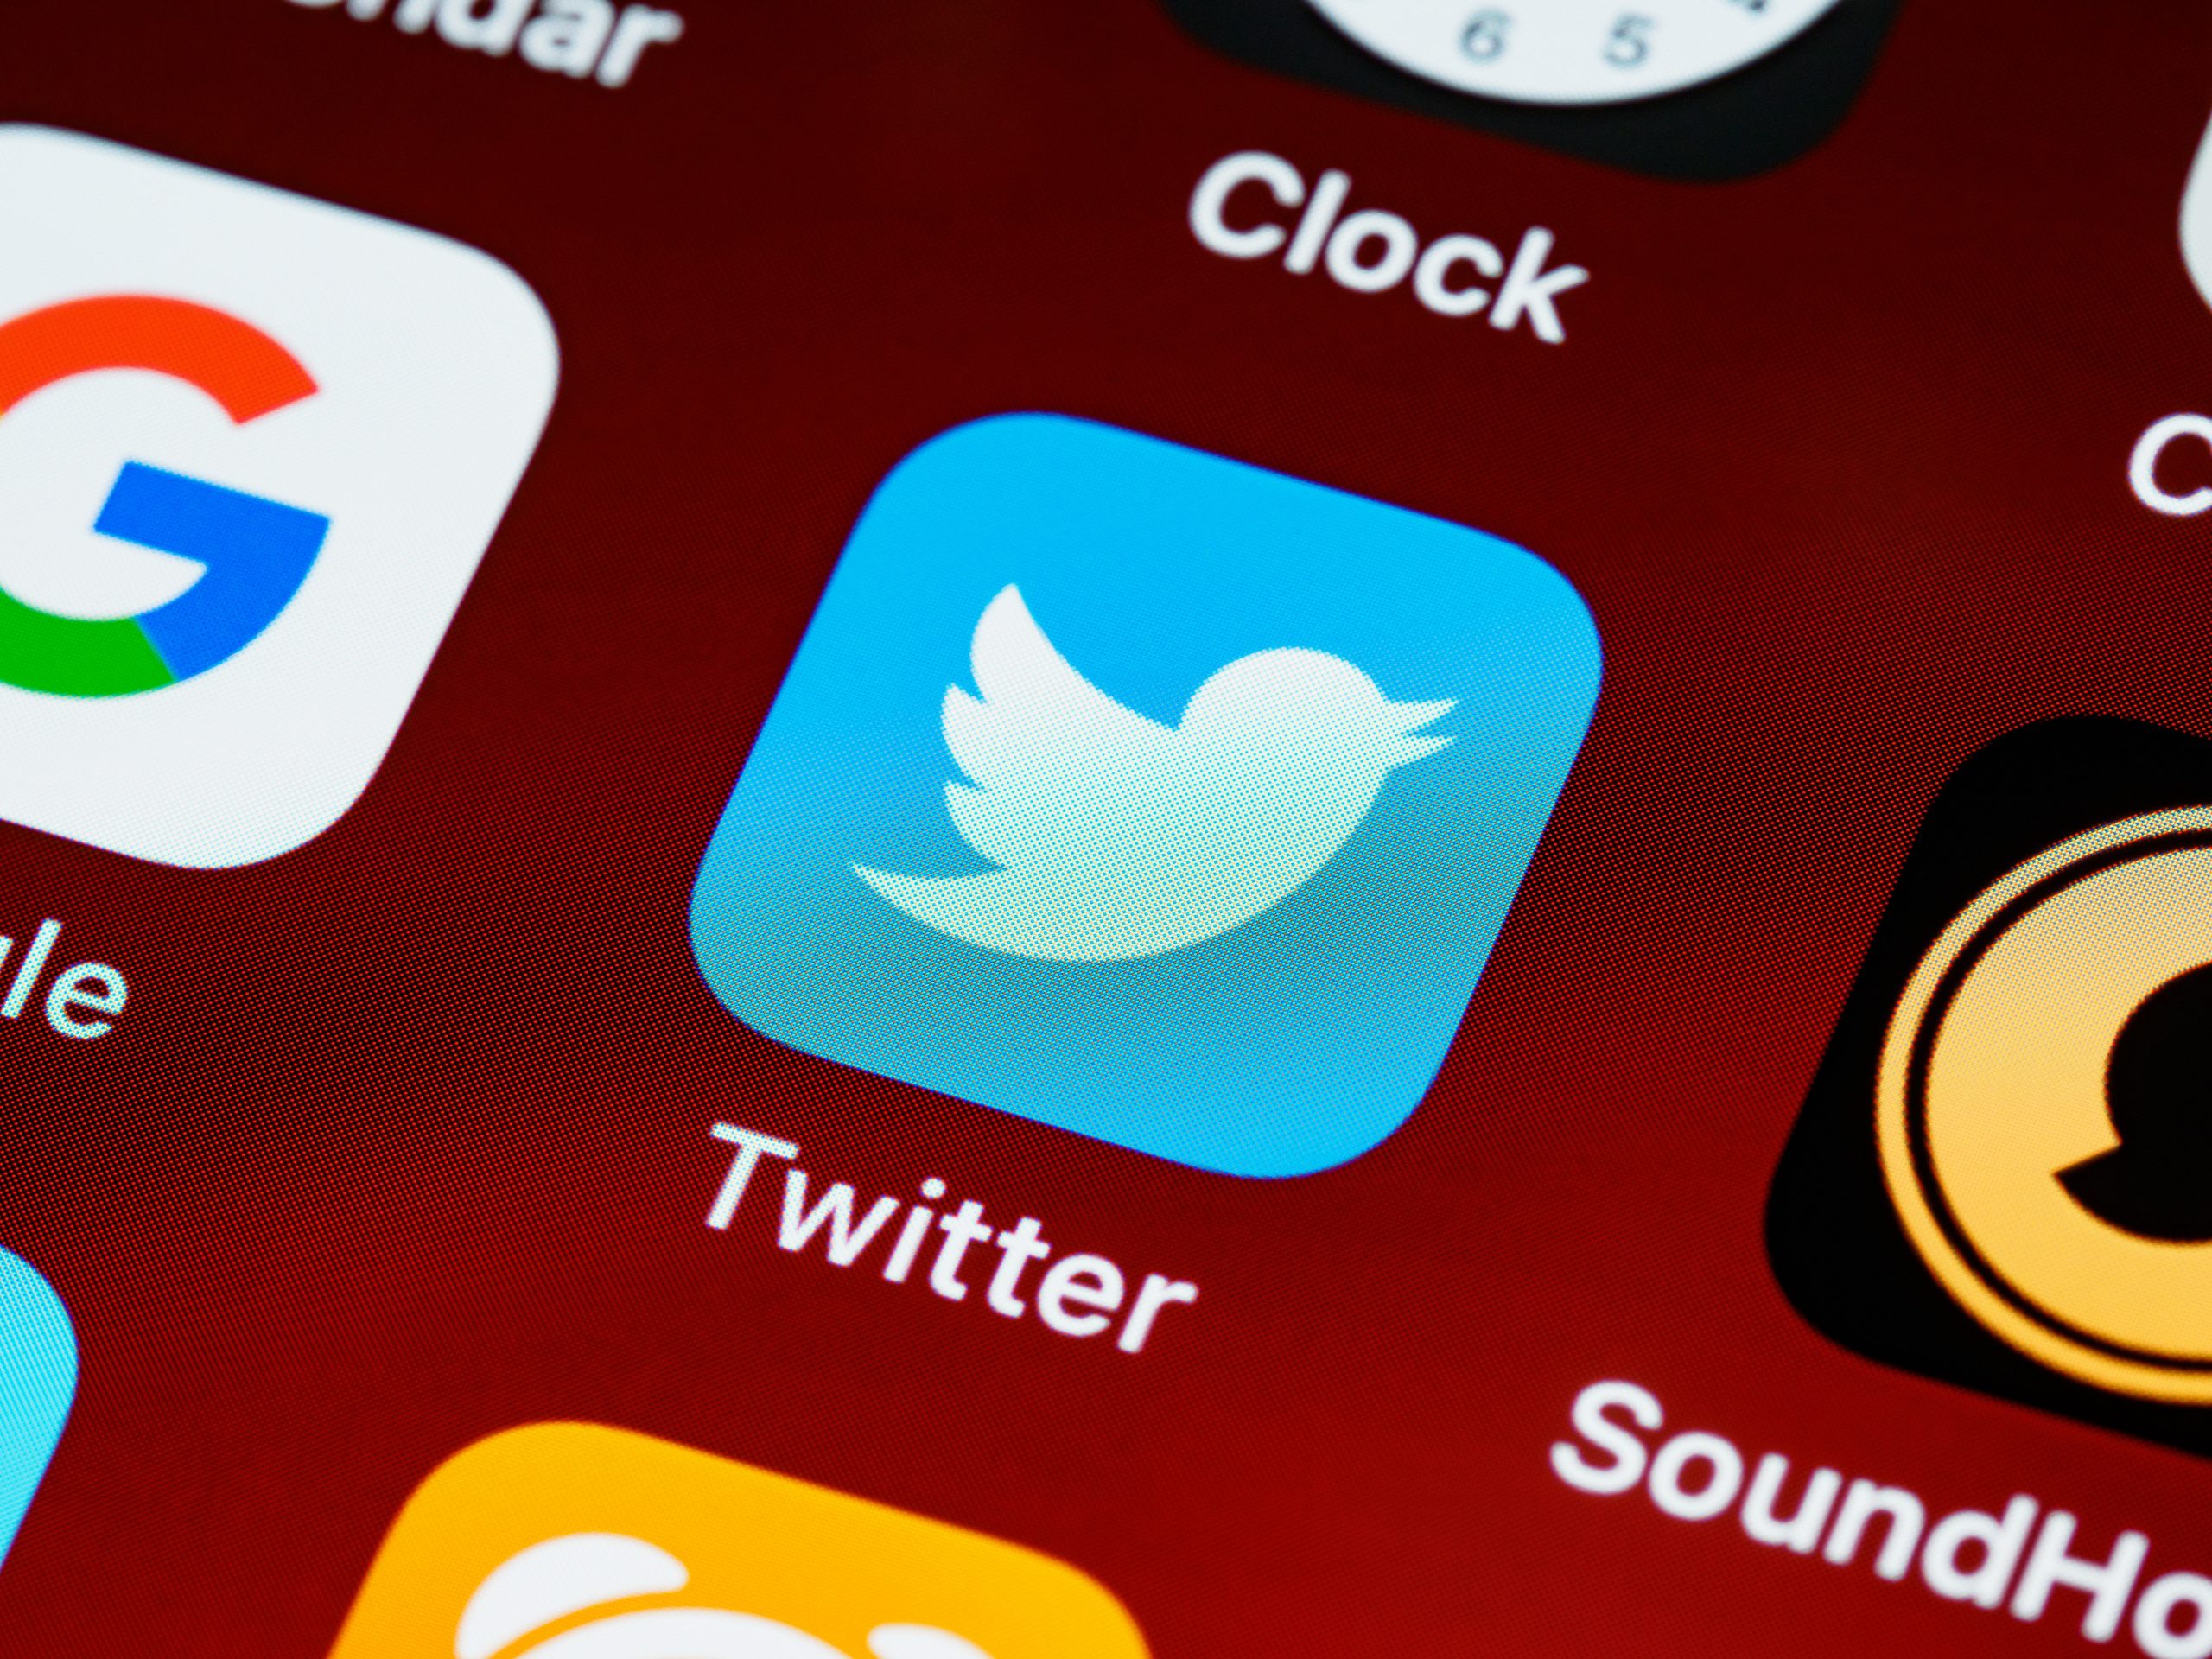 ¿Adiós fake news? Twitter trabajaría en etiquetas para advertir sobre desinformación